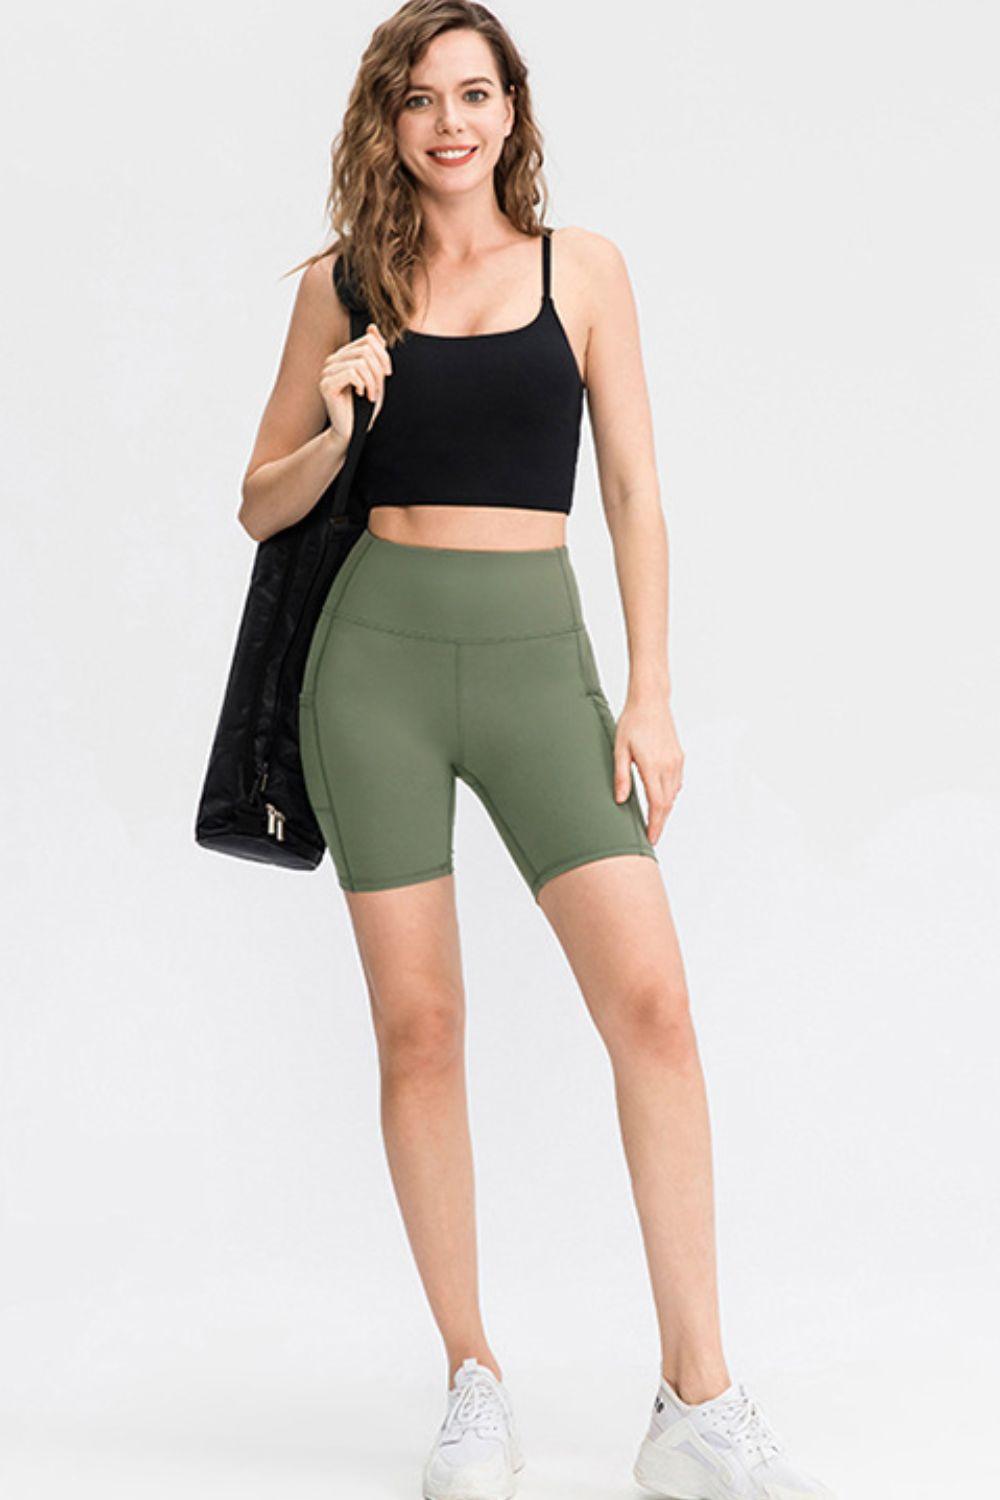 Gymgoer Slim Fit Yoga Shorts With Pockets - MXSTUDIO.COM